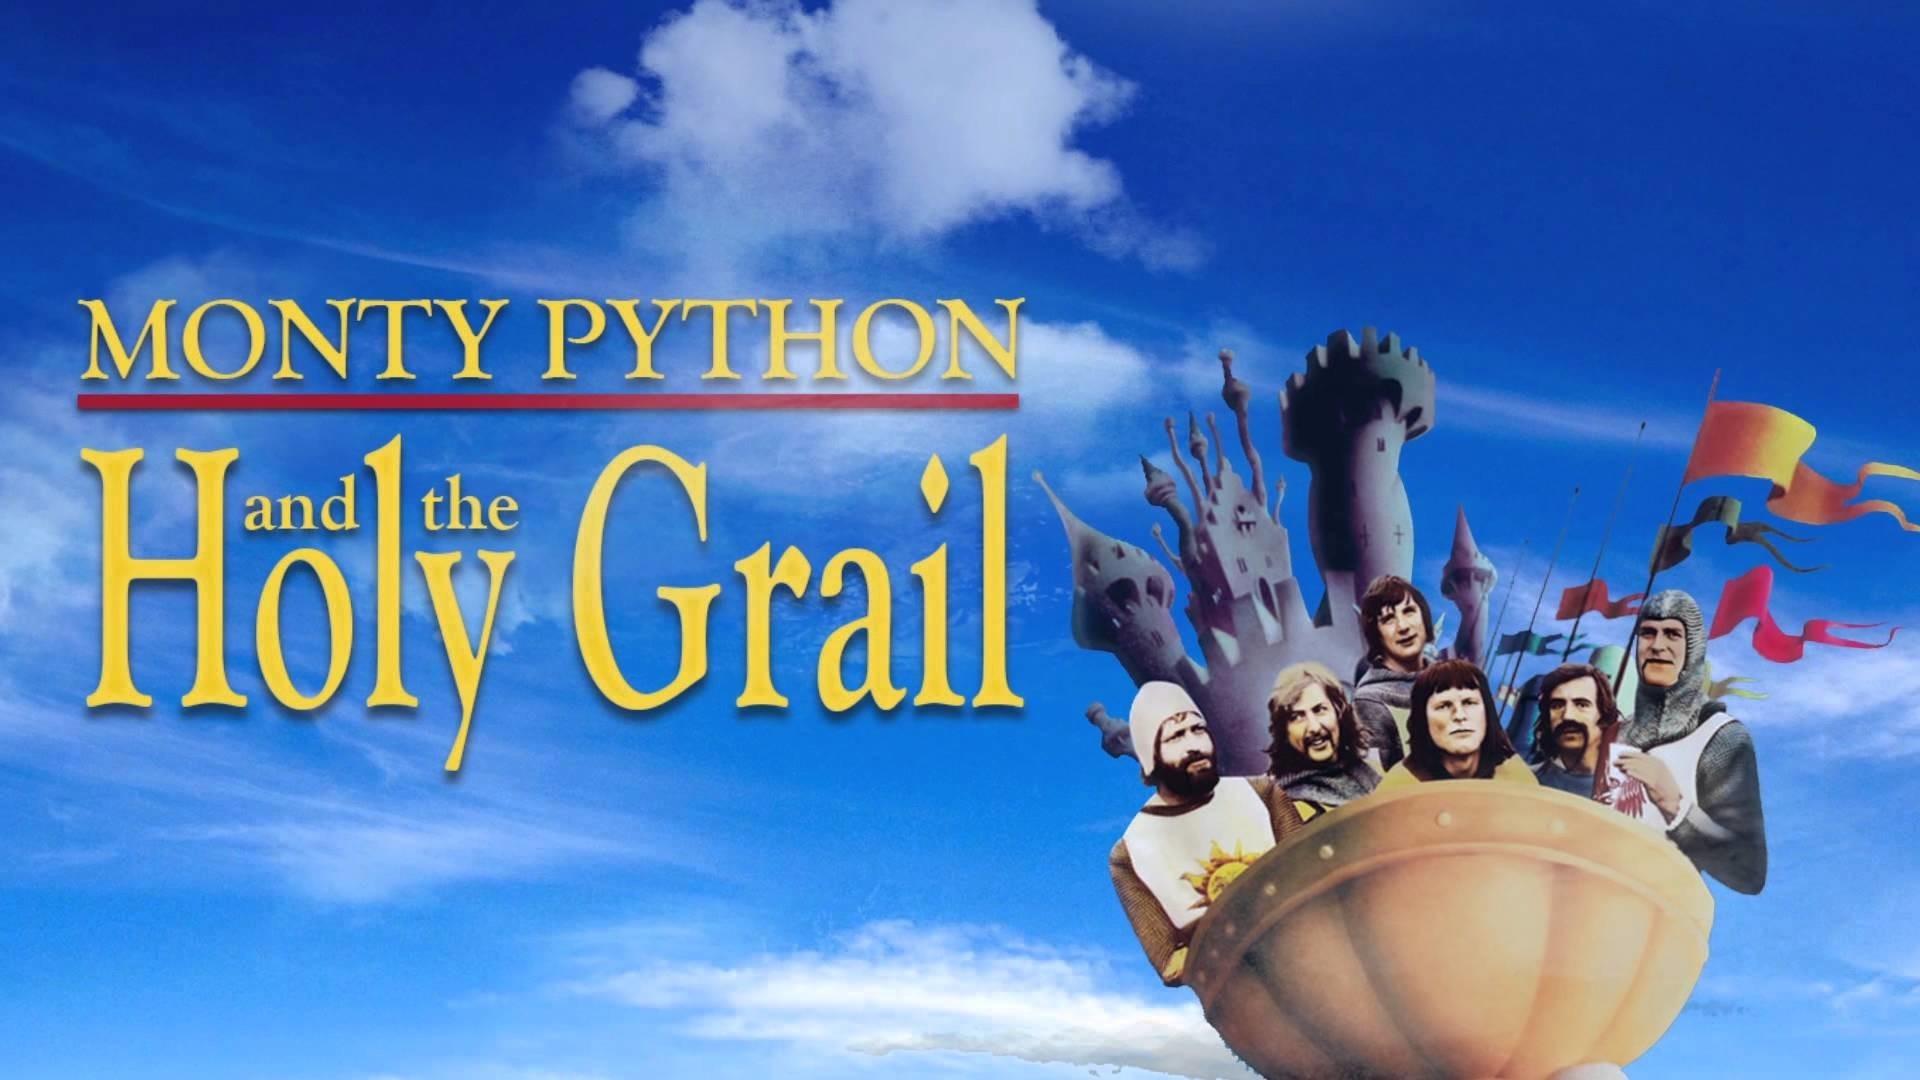 Monty Python Wallpaper background picture